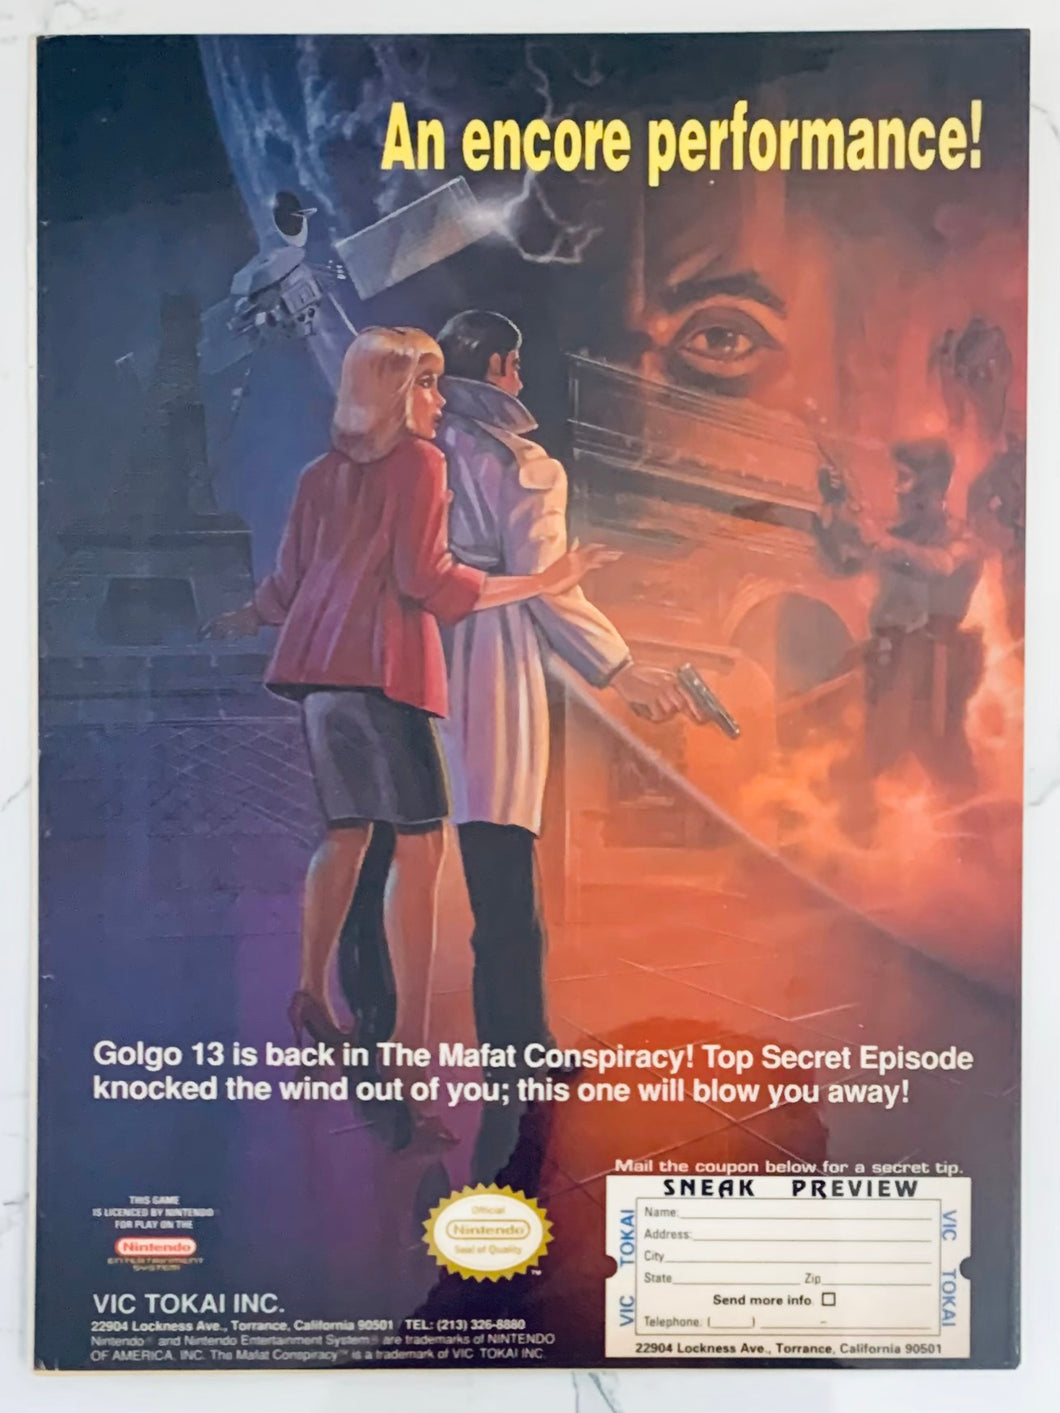 The Mafat Conspiracy: Top Secret Episode - NES - Original Vintage Advertisement - Print Ads - Laminated A4 Poster